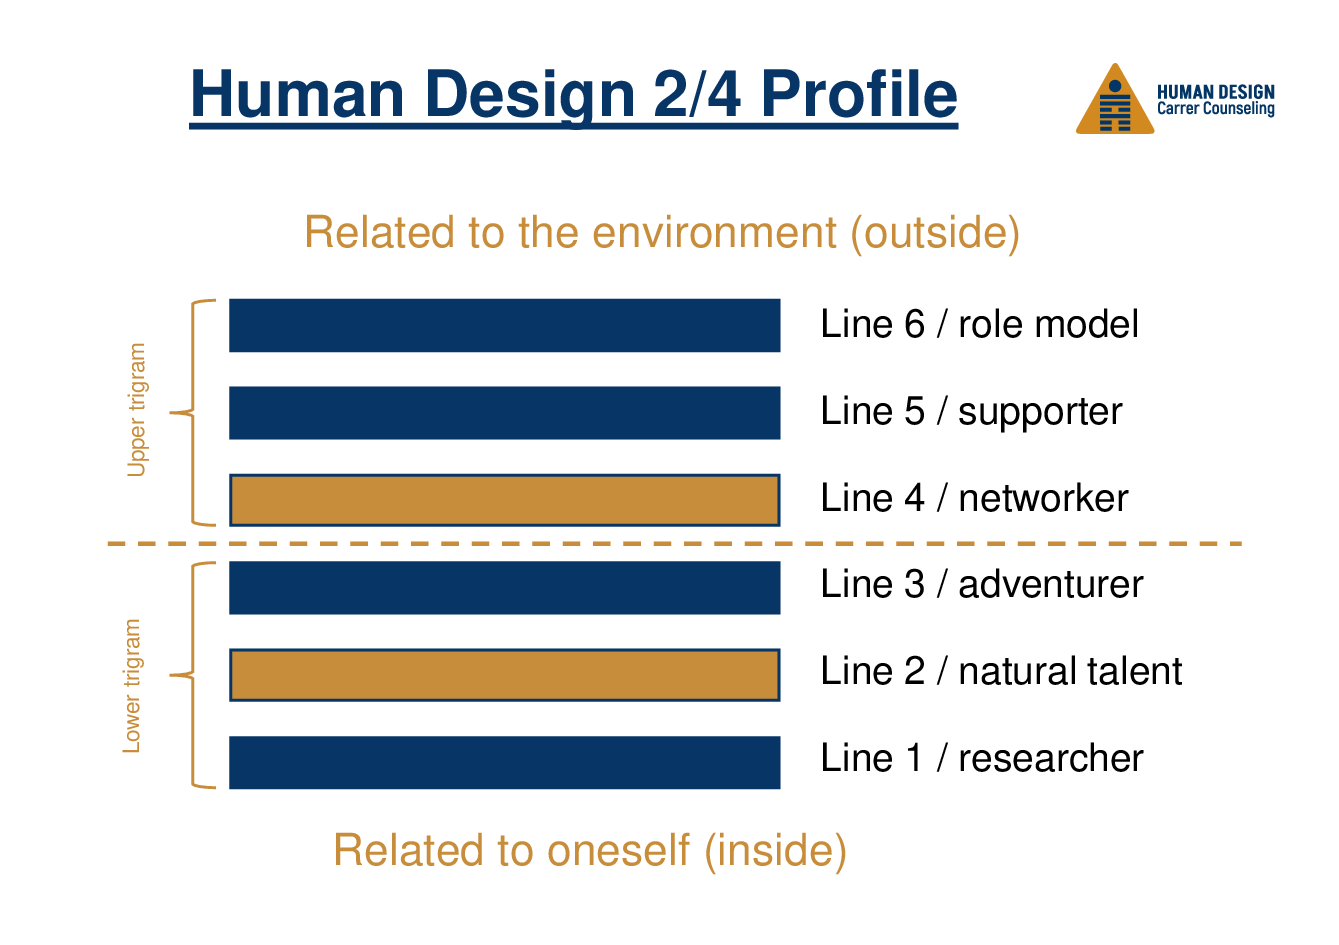 Human Design 2/4 Profile on the job